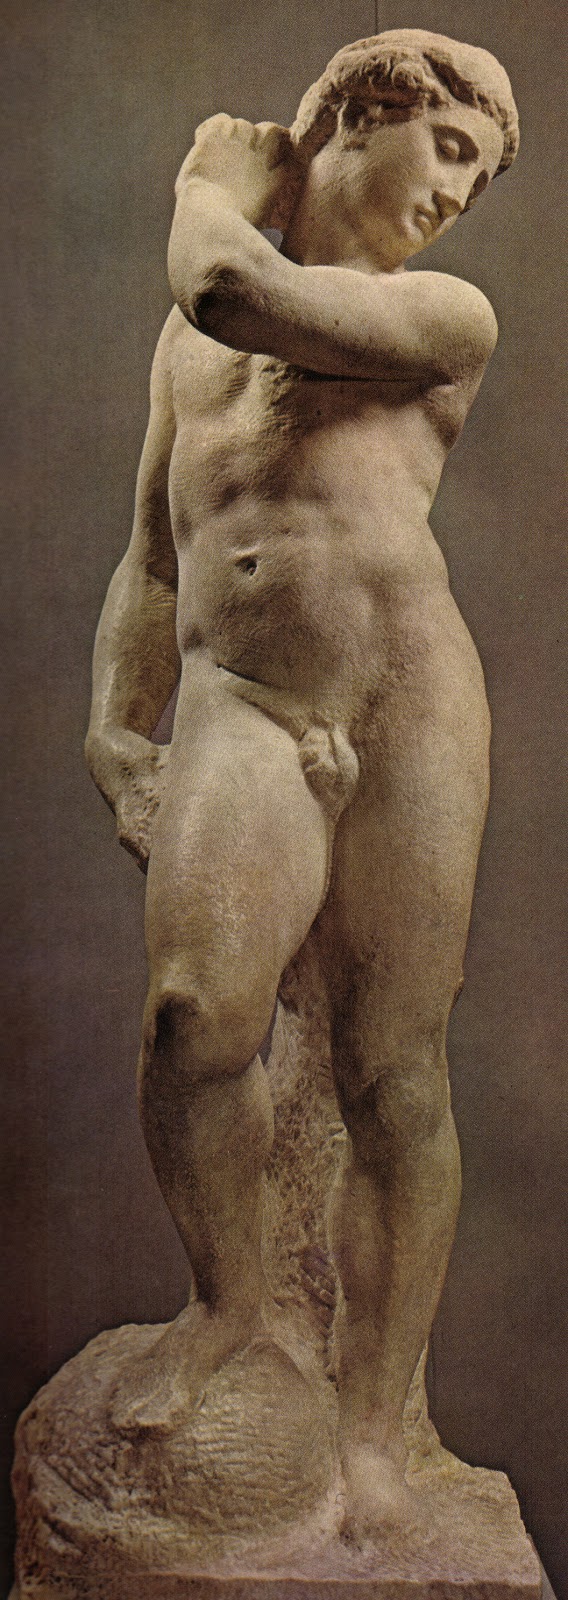 Michelangelo+Buonarroti-1475-1564 (90).jpg